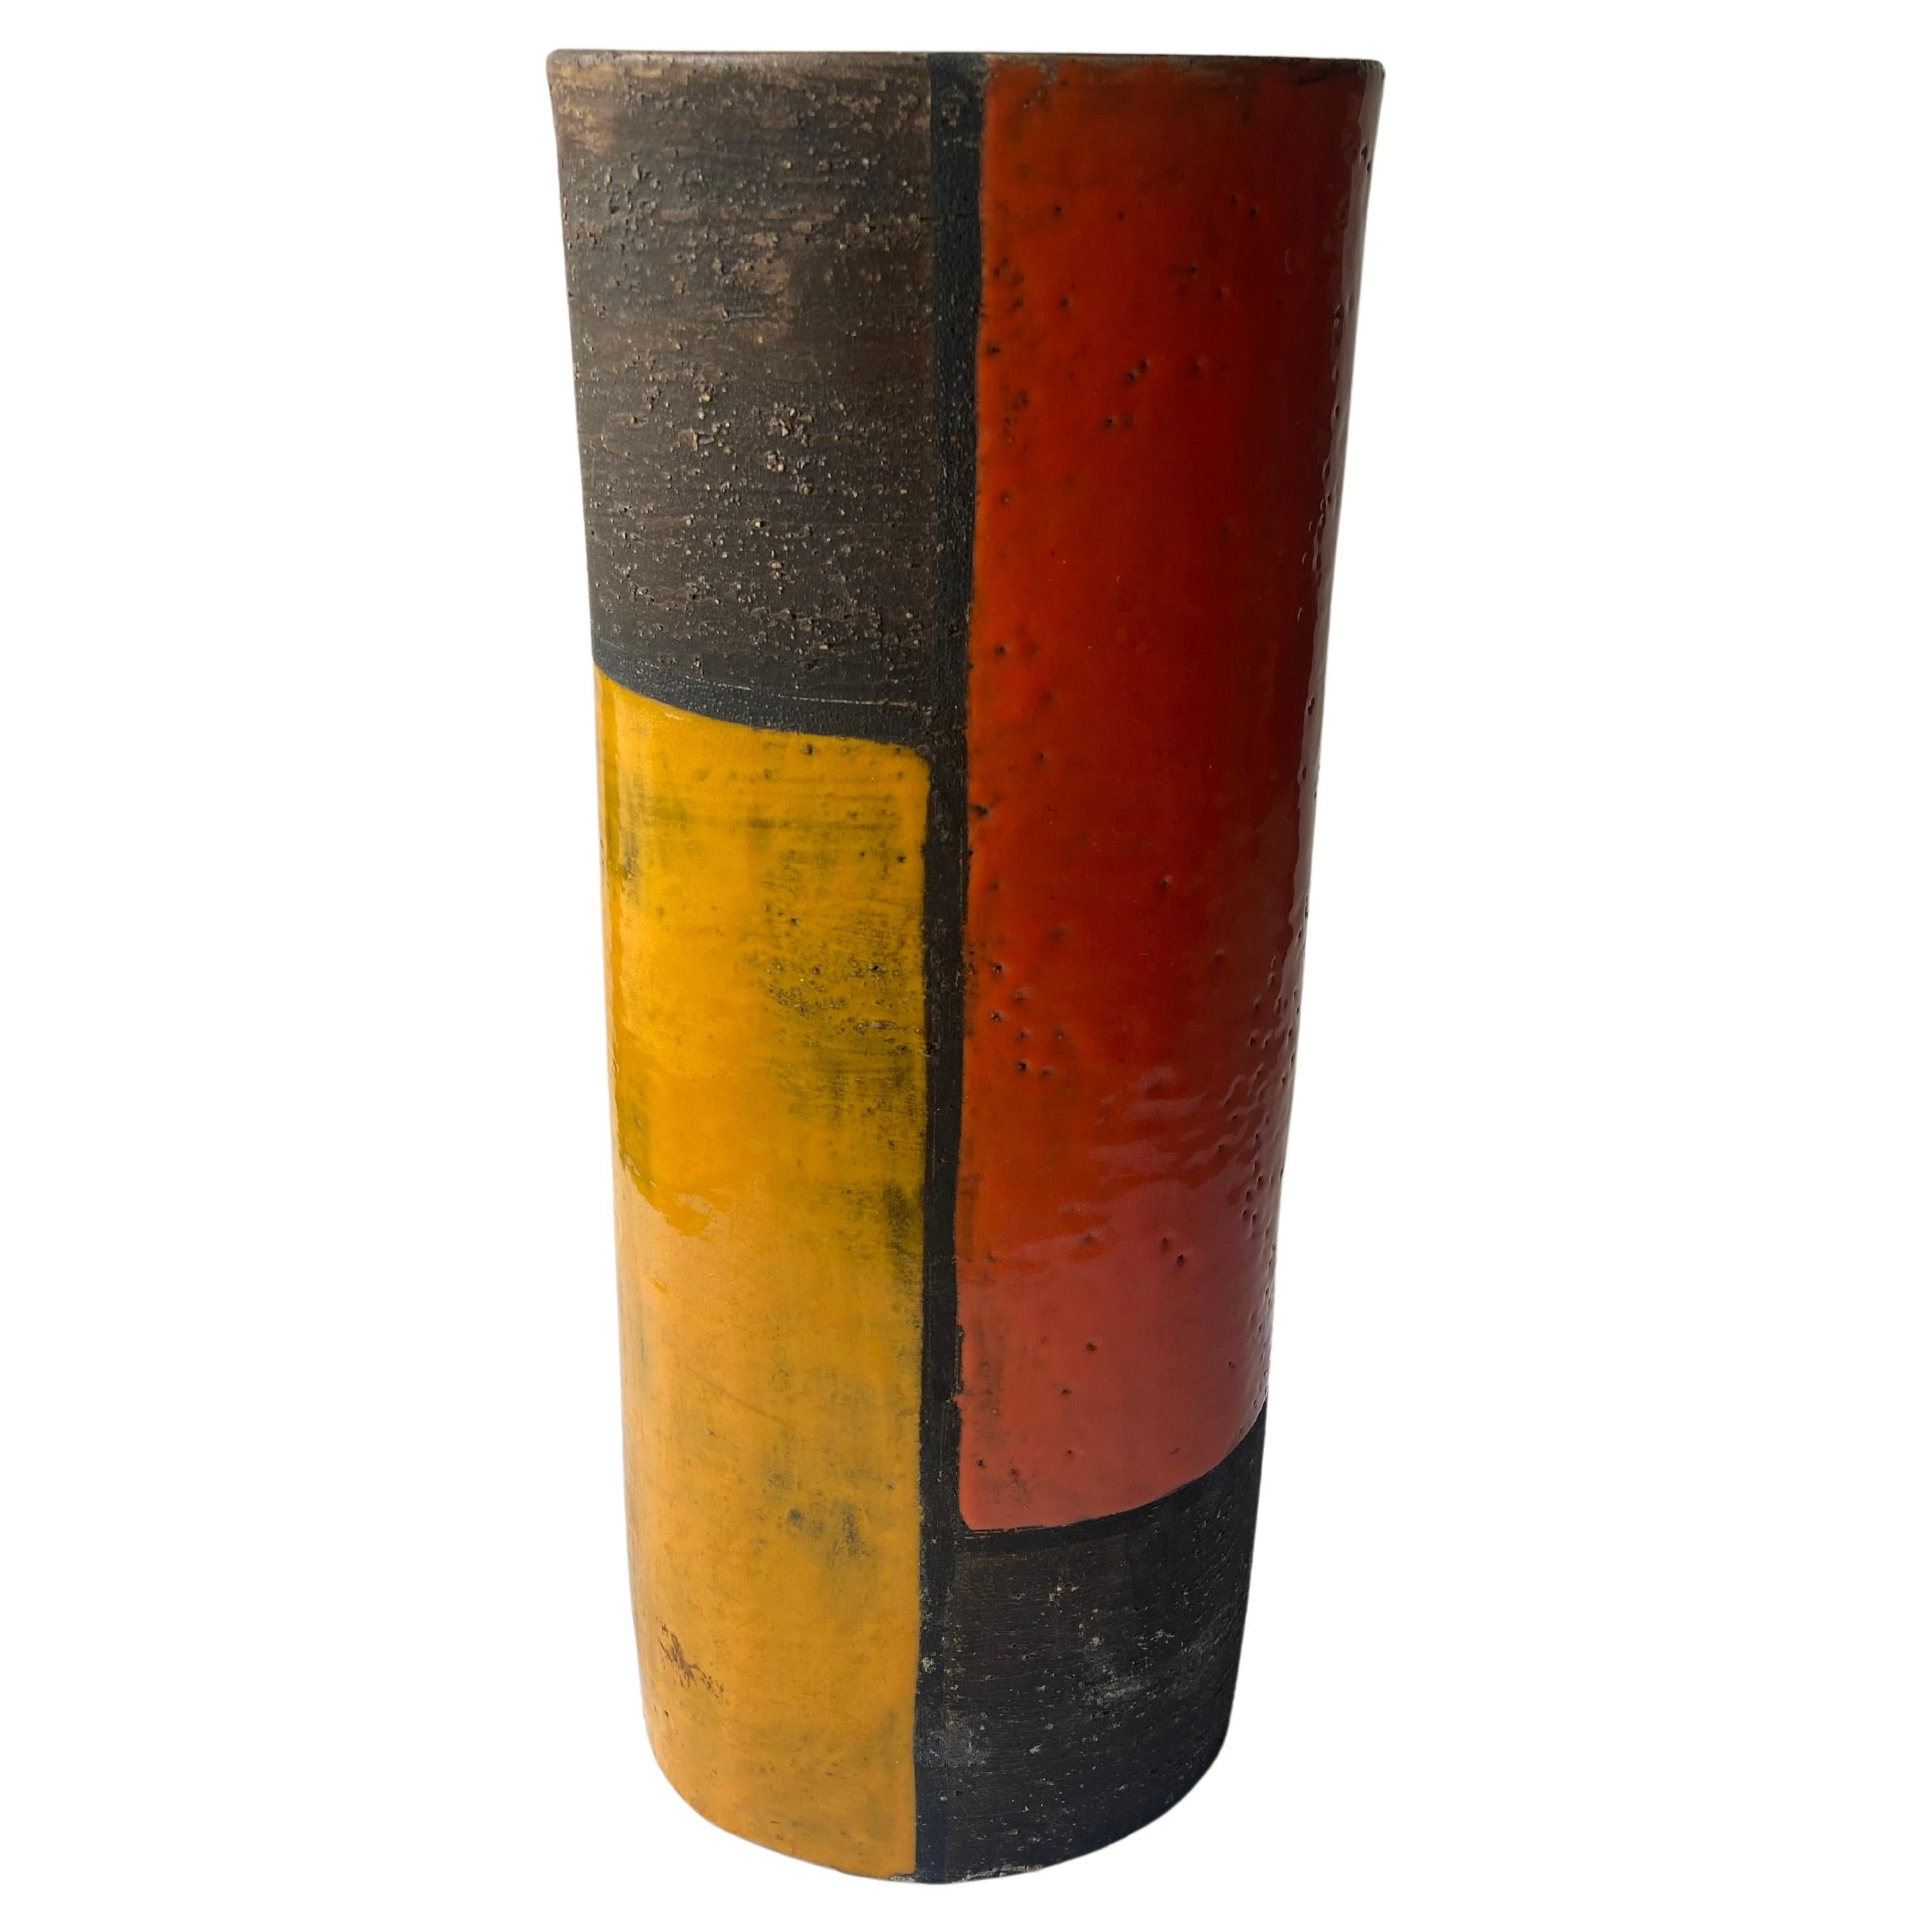 Aldo Londi, Keramik/Keramik Vase von Bitossi, Geometrisch/Mondrian Muster